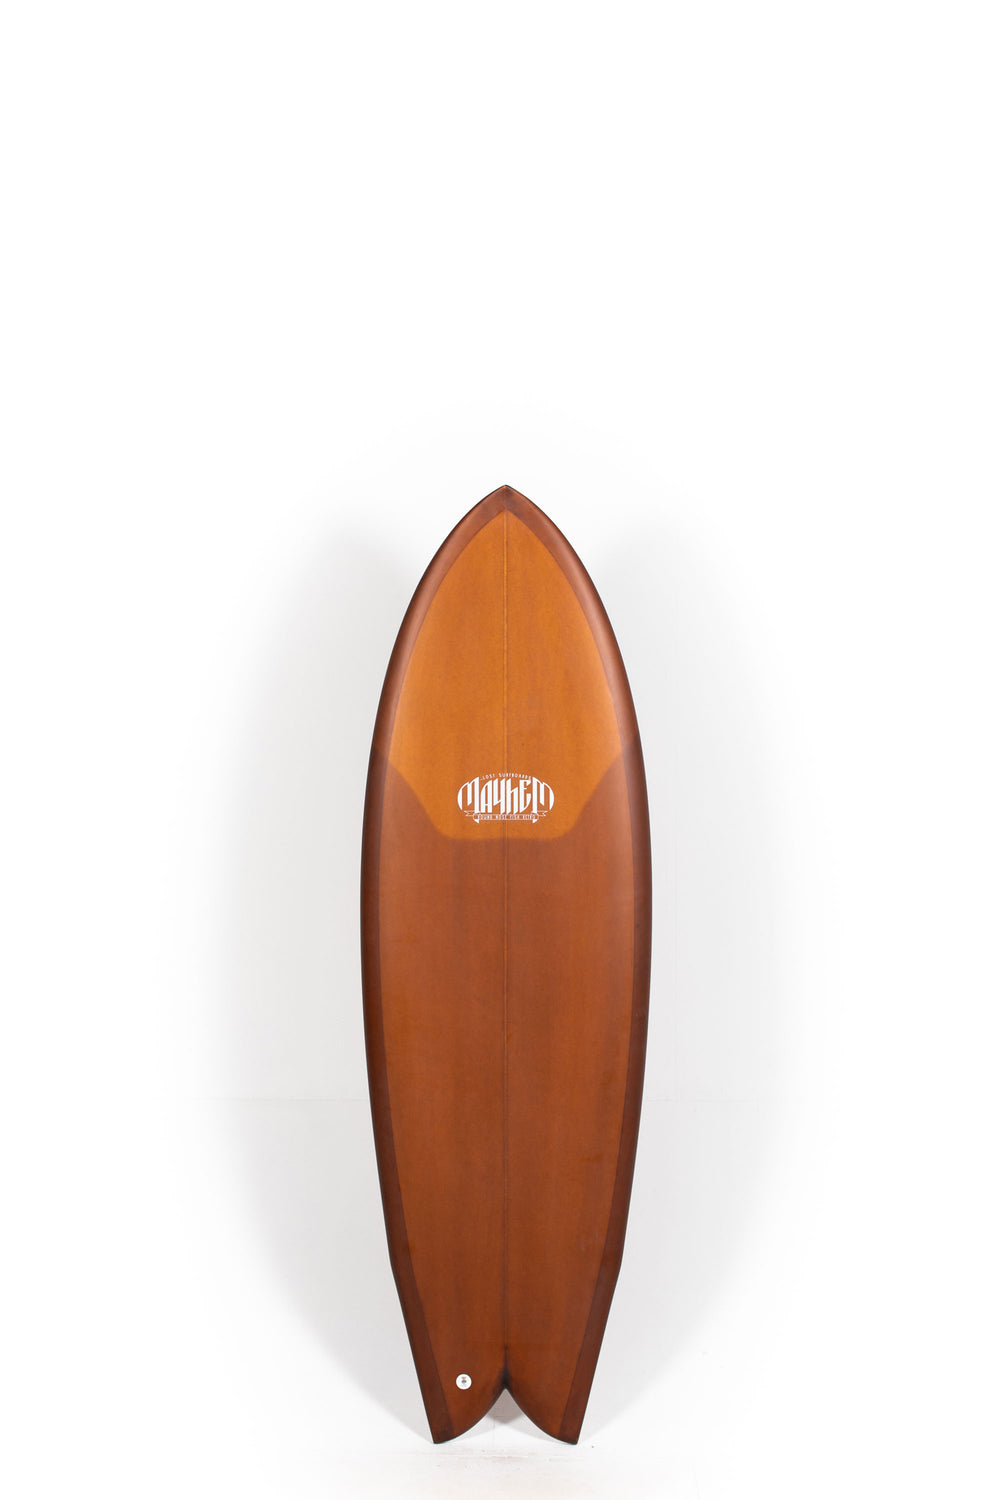 Pukas Surf Shop - Lost Surfboard - RNF RETRO'23 REVAMP by Mayhem - 5’10” x 21.5